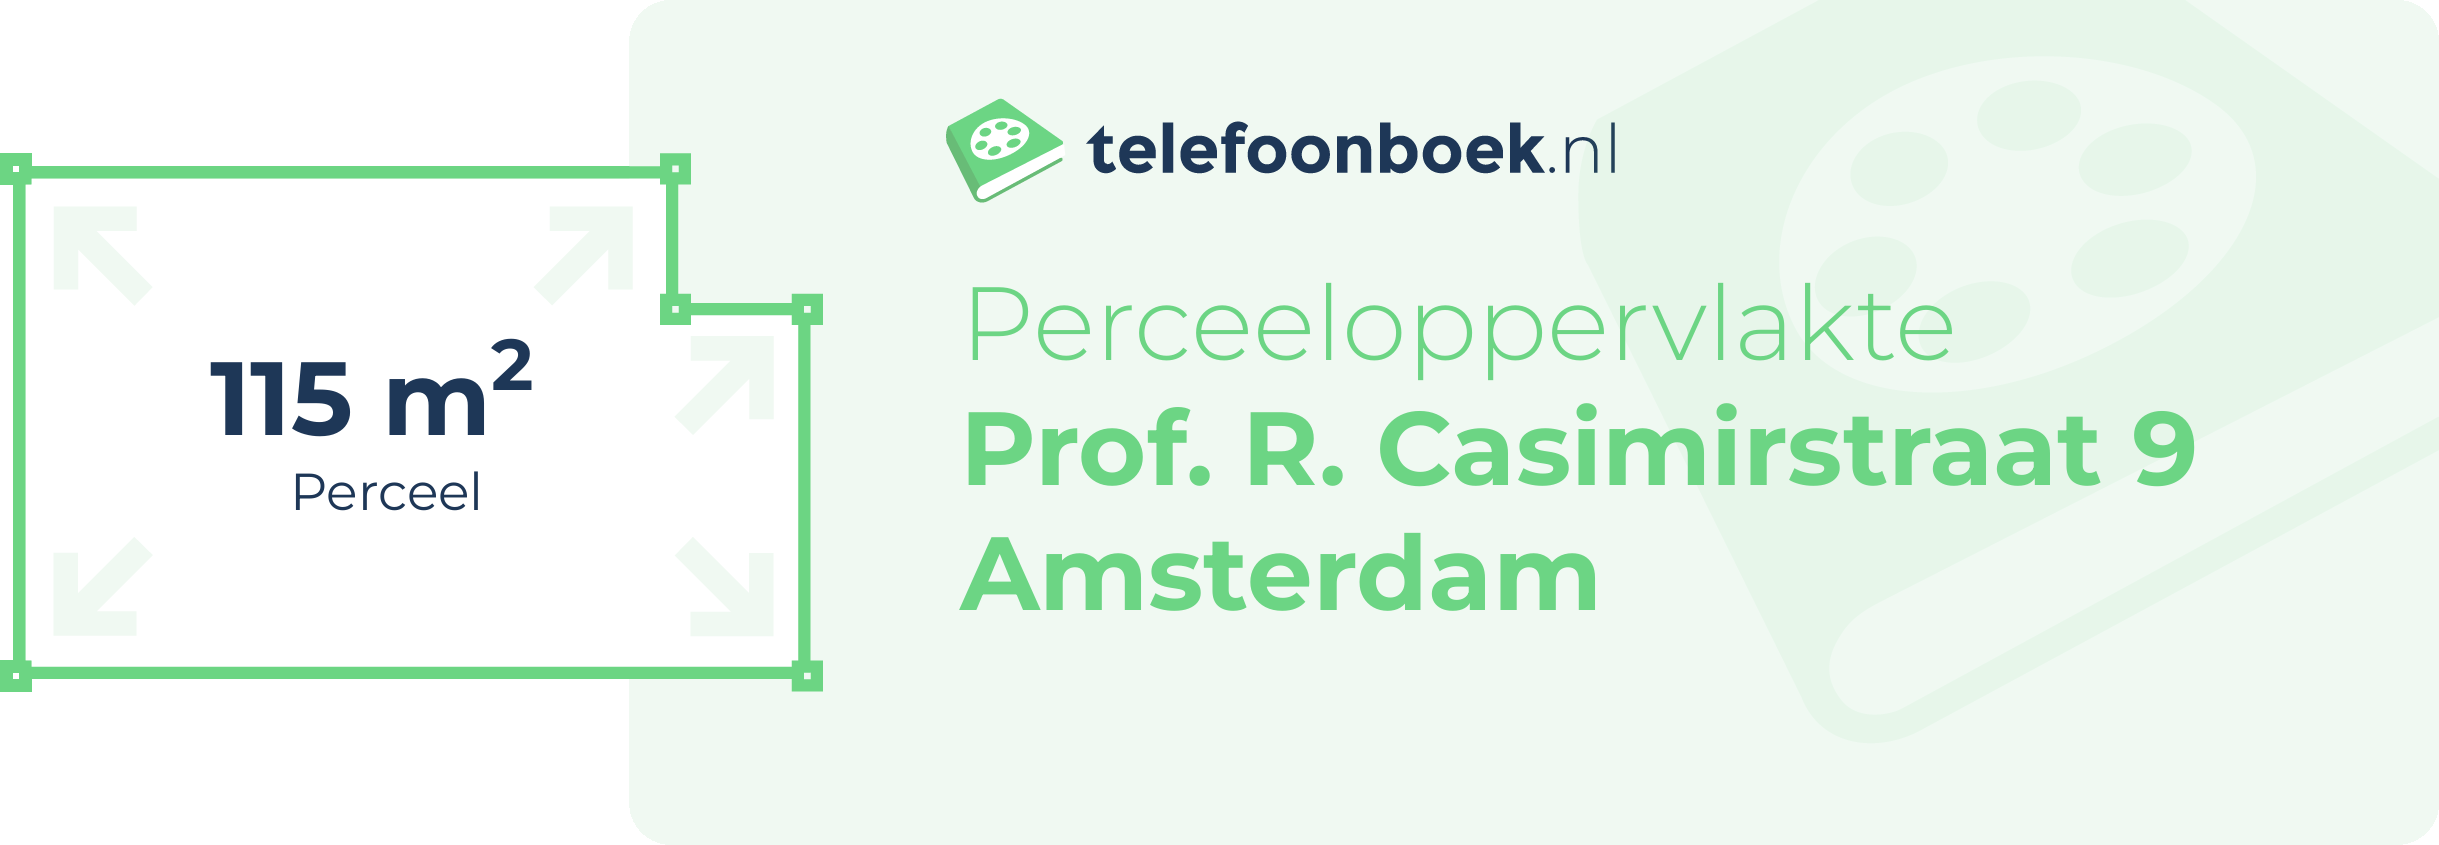 Perceeloppervlakte Prof. R. Casimirstraat 9 Amsterdam